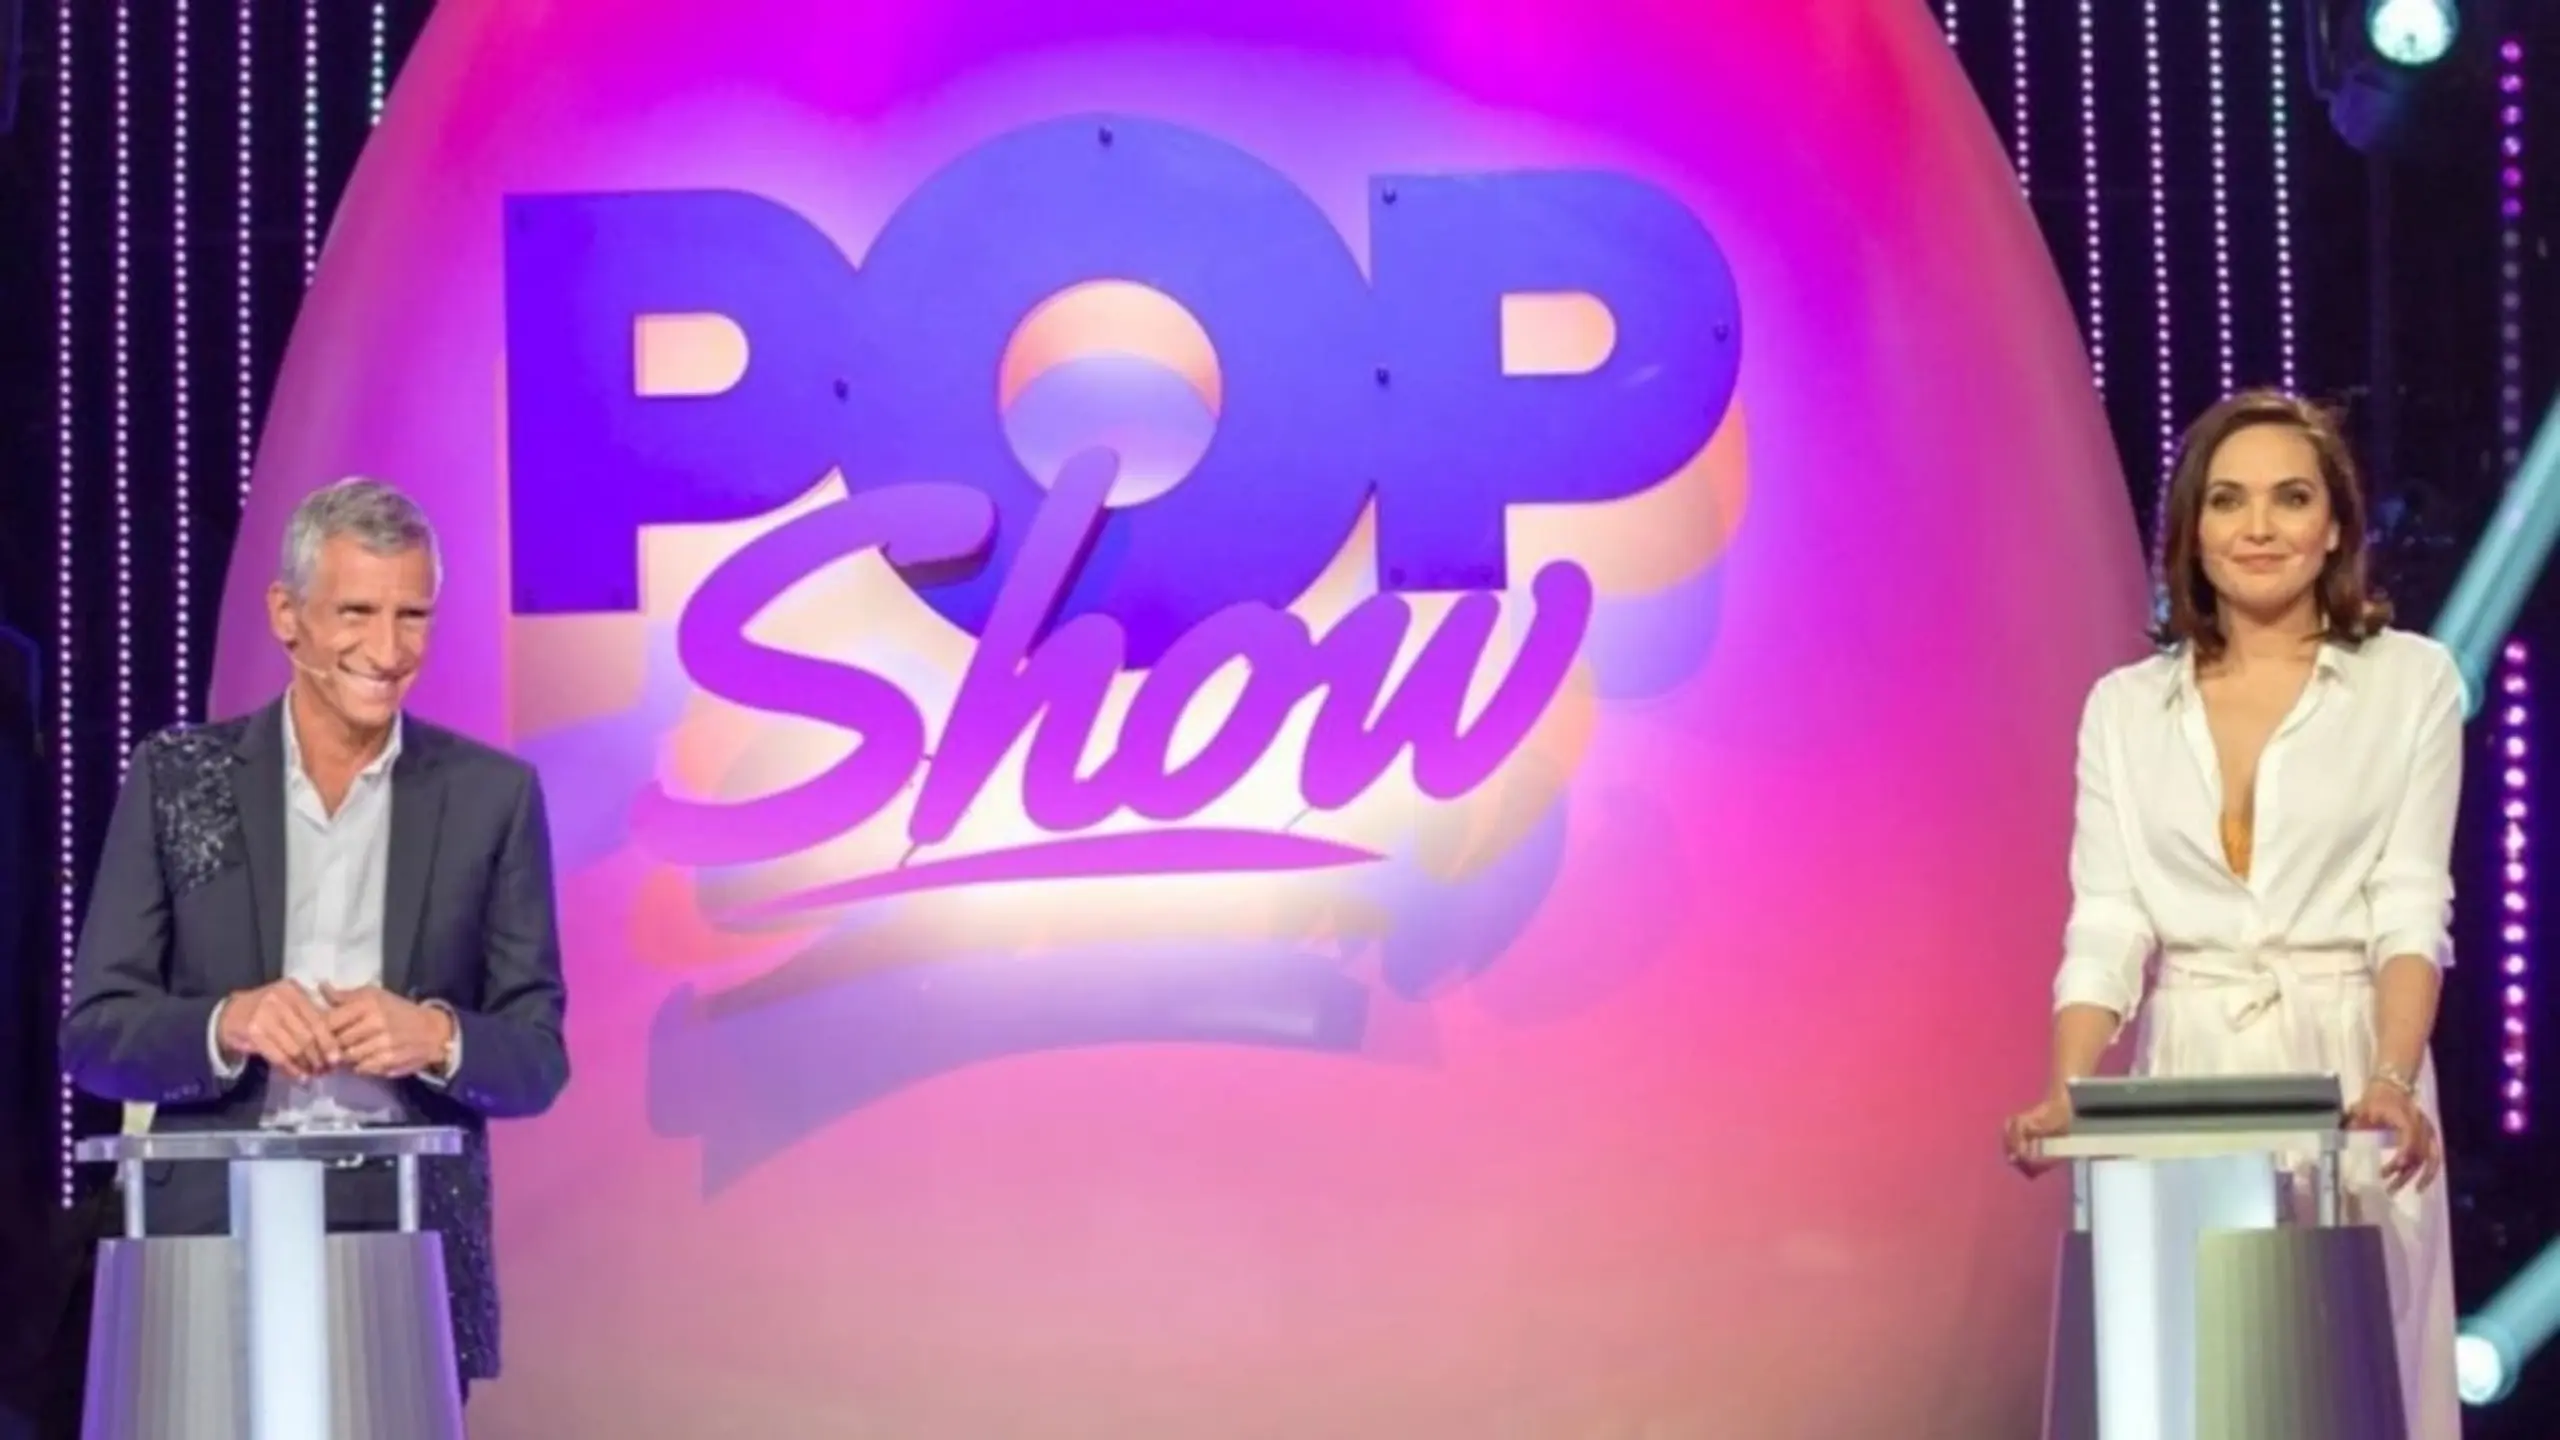 Pop Show